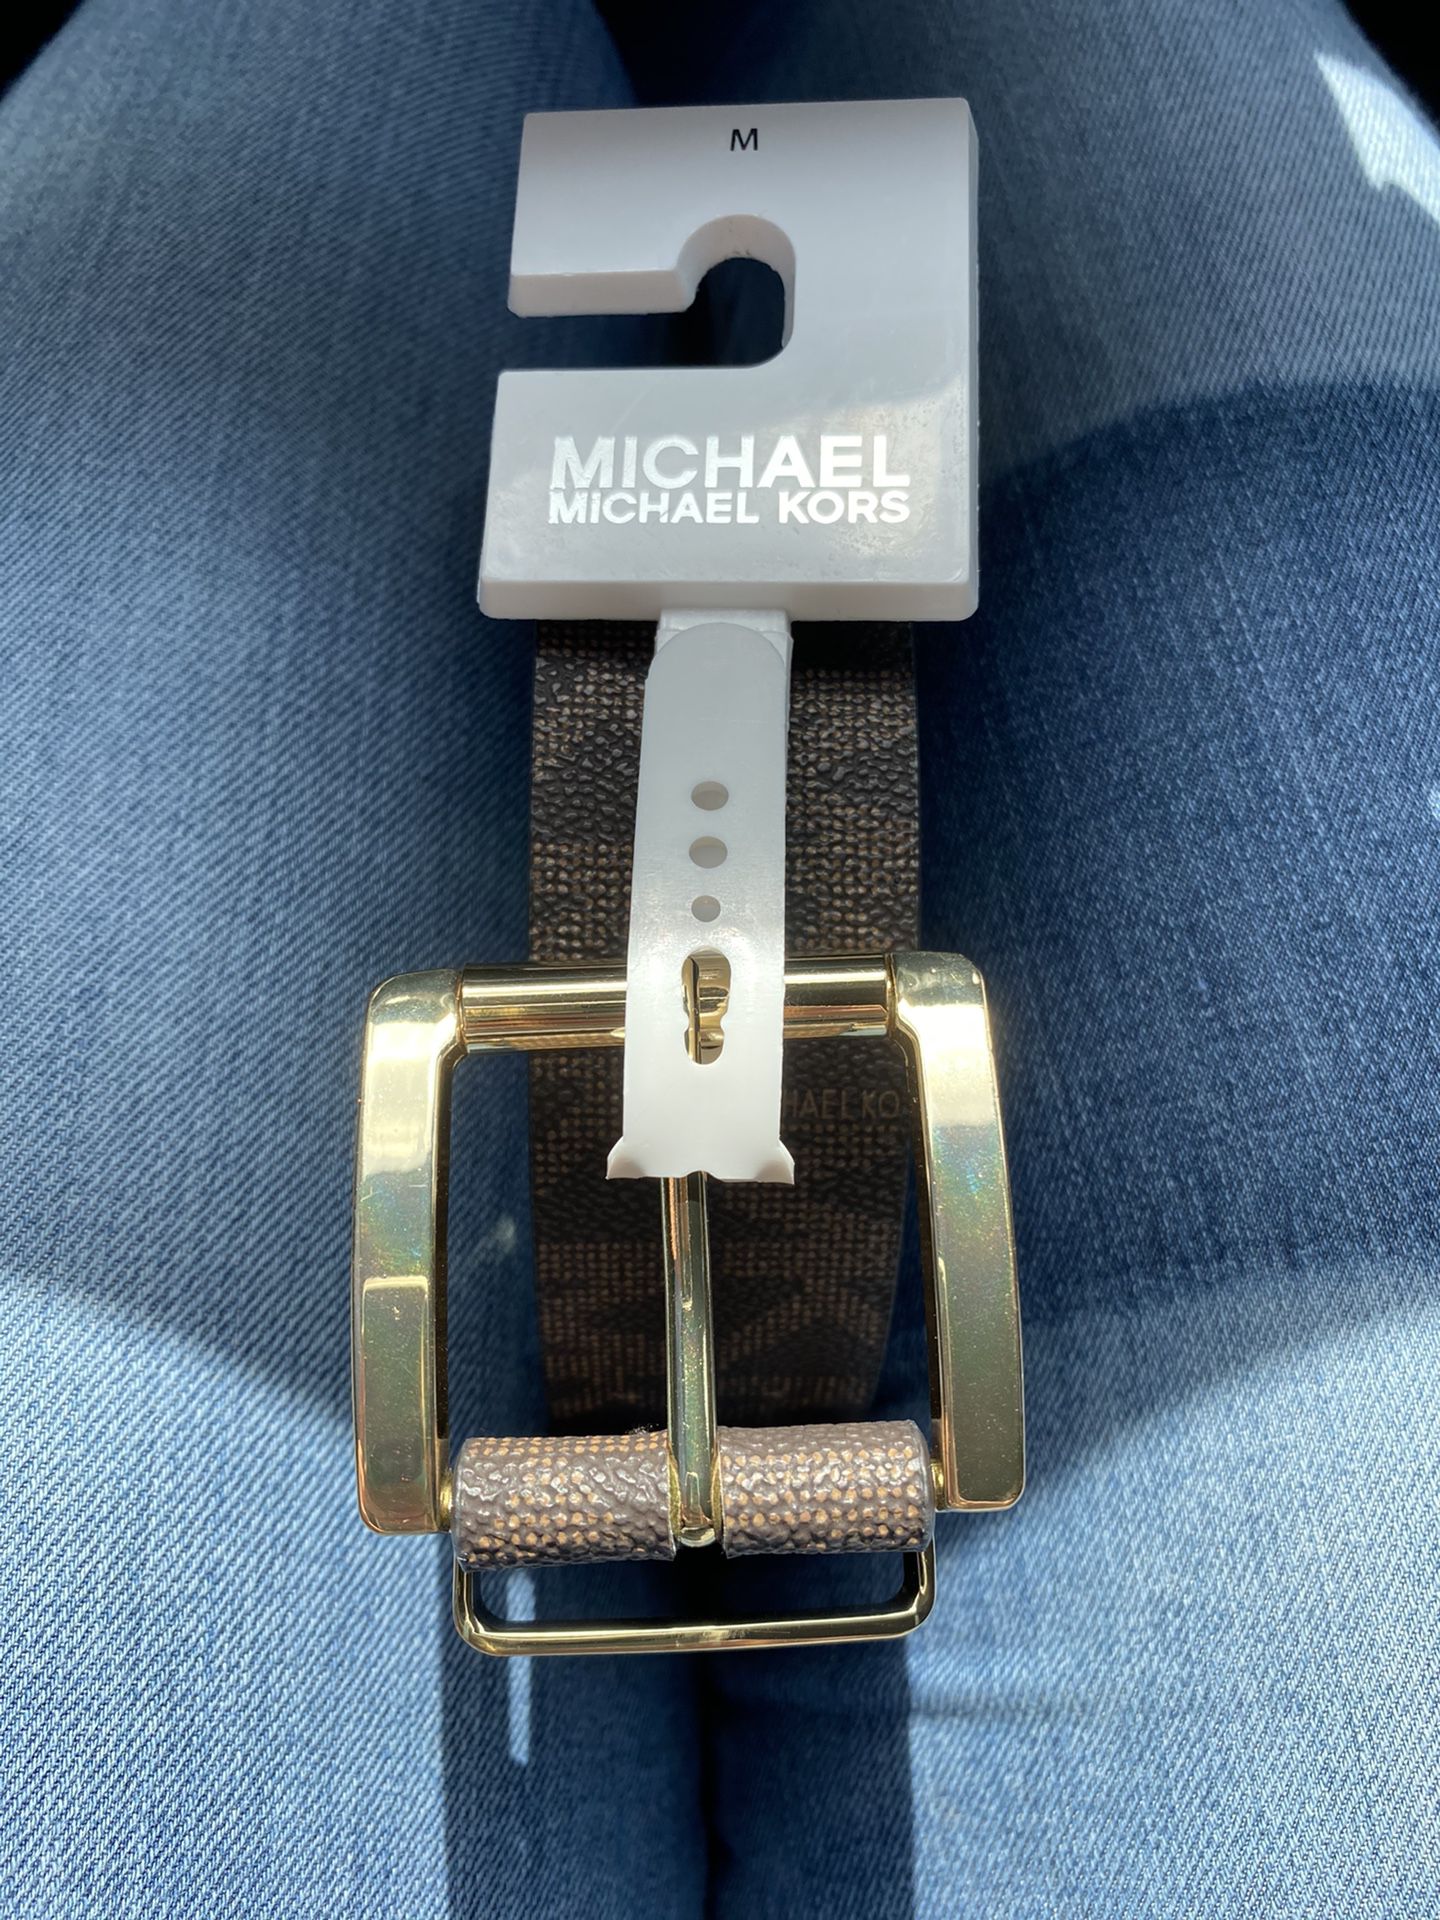 Michael Kors belt size medium